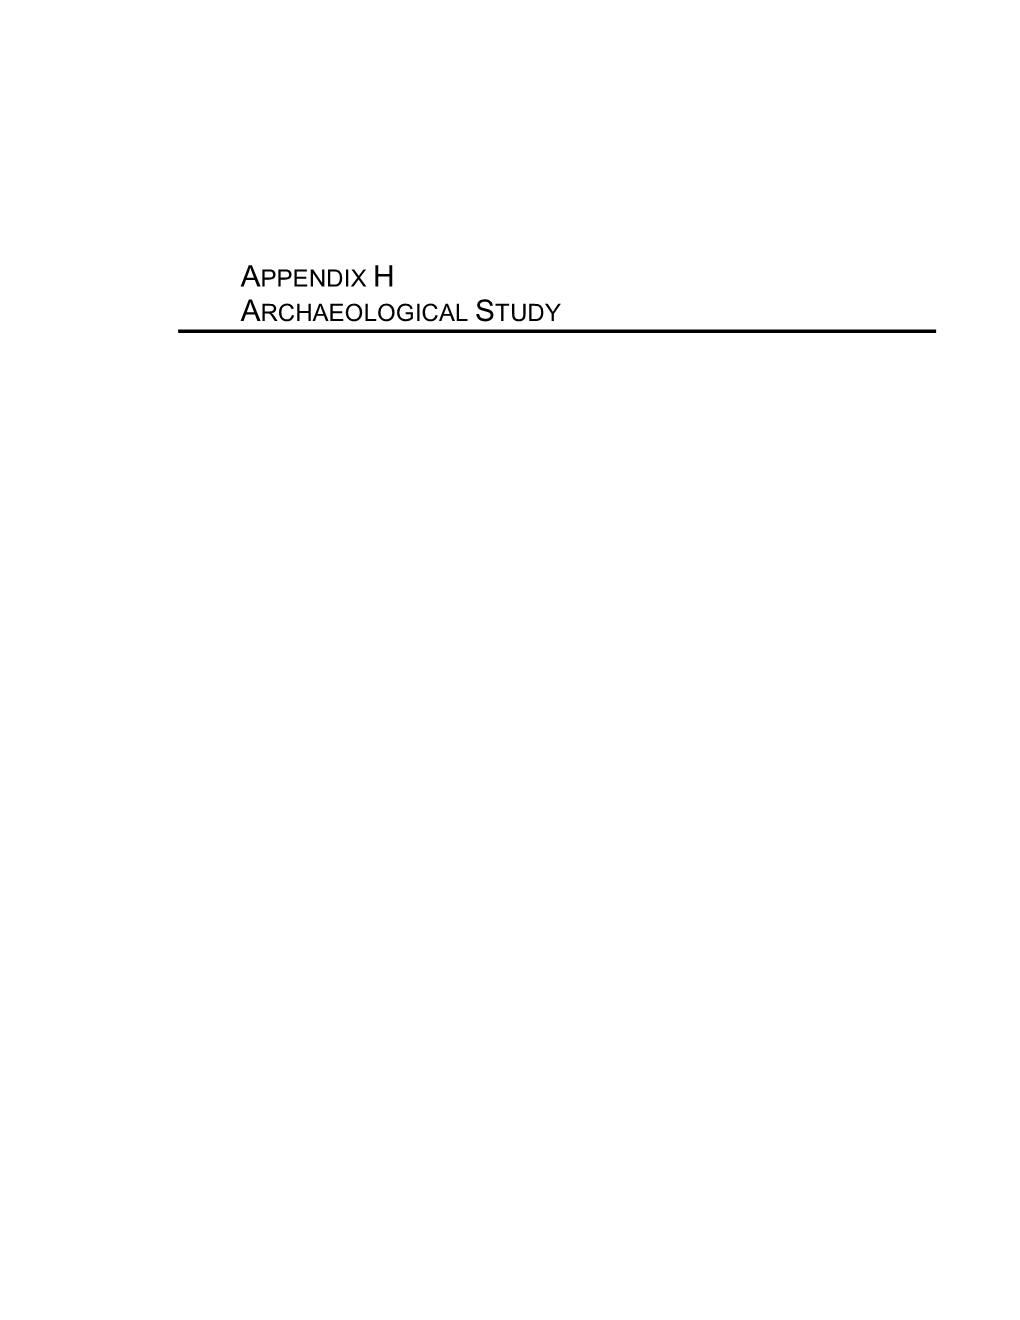 Appendix H Archaeological Study